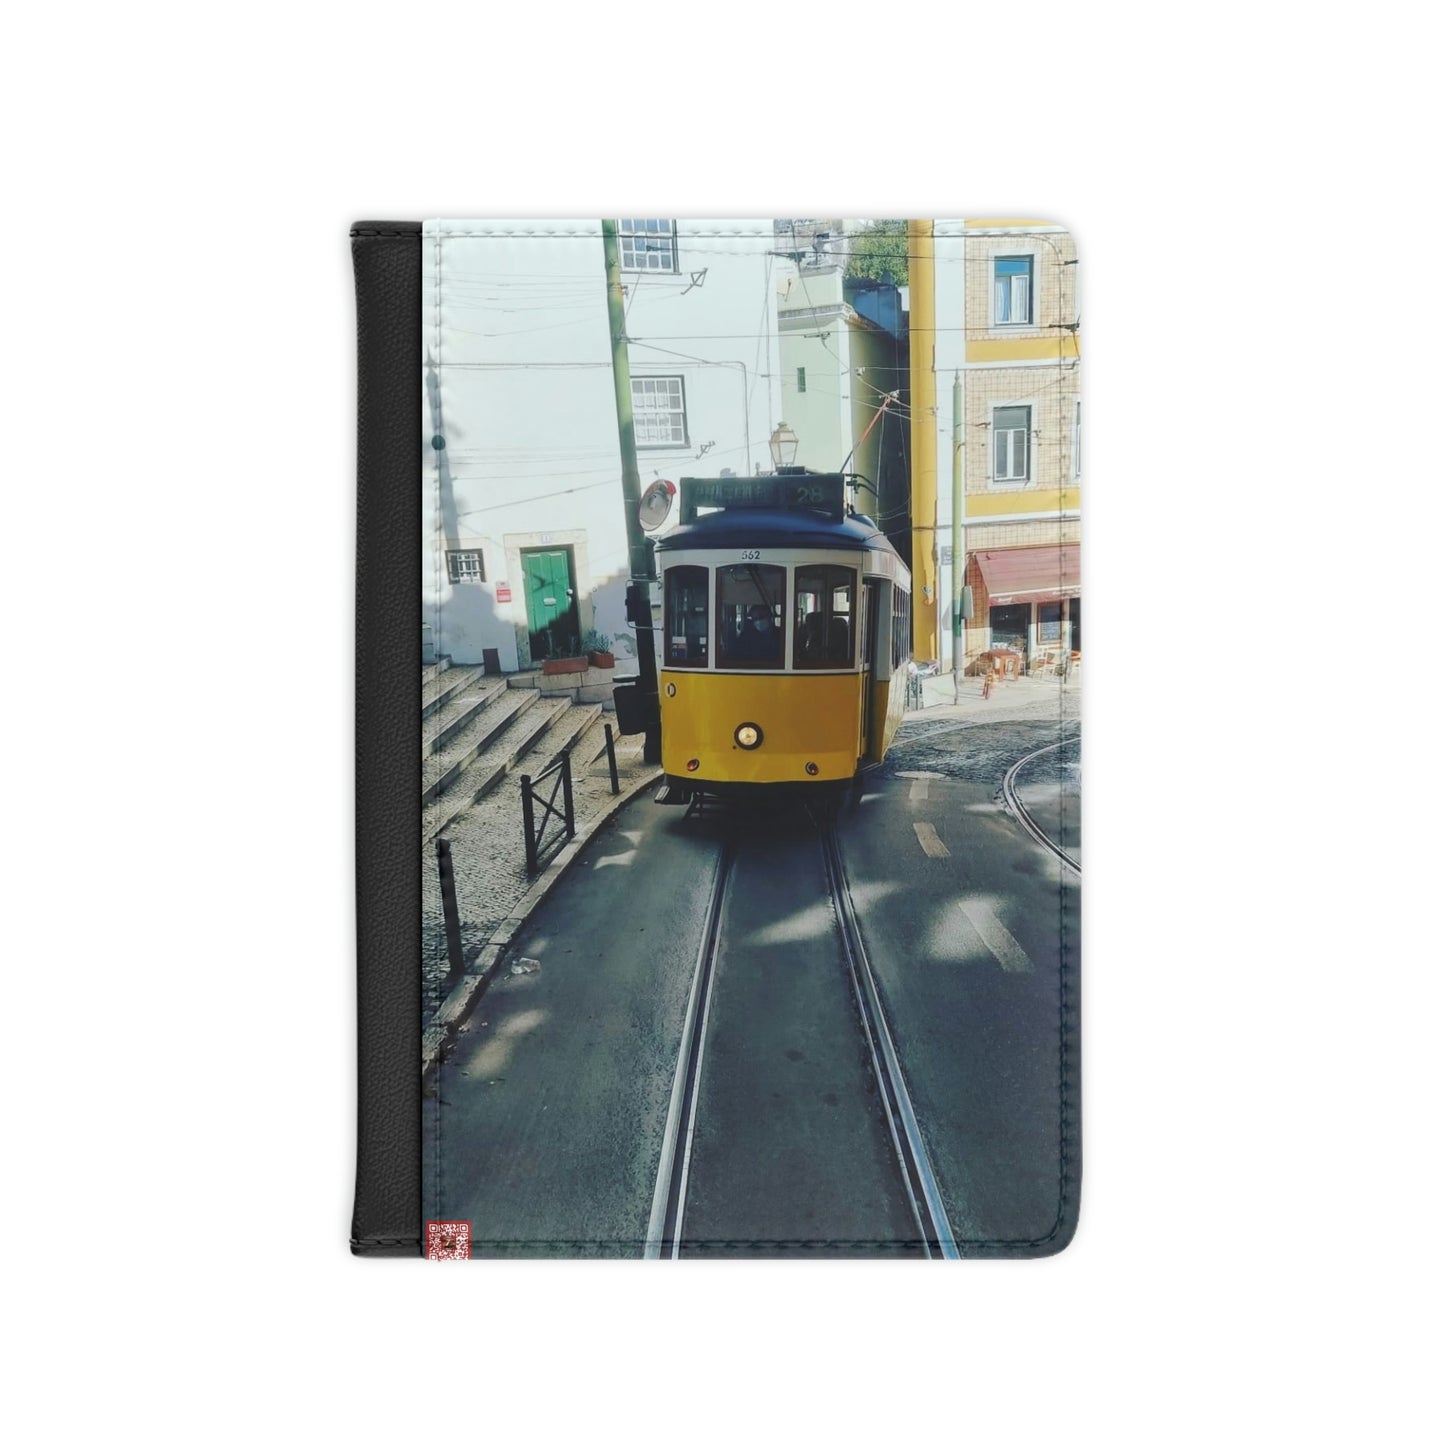 Remodelado Tram | Portugal | Passport Cover